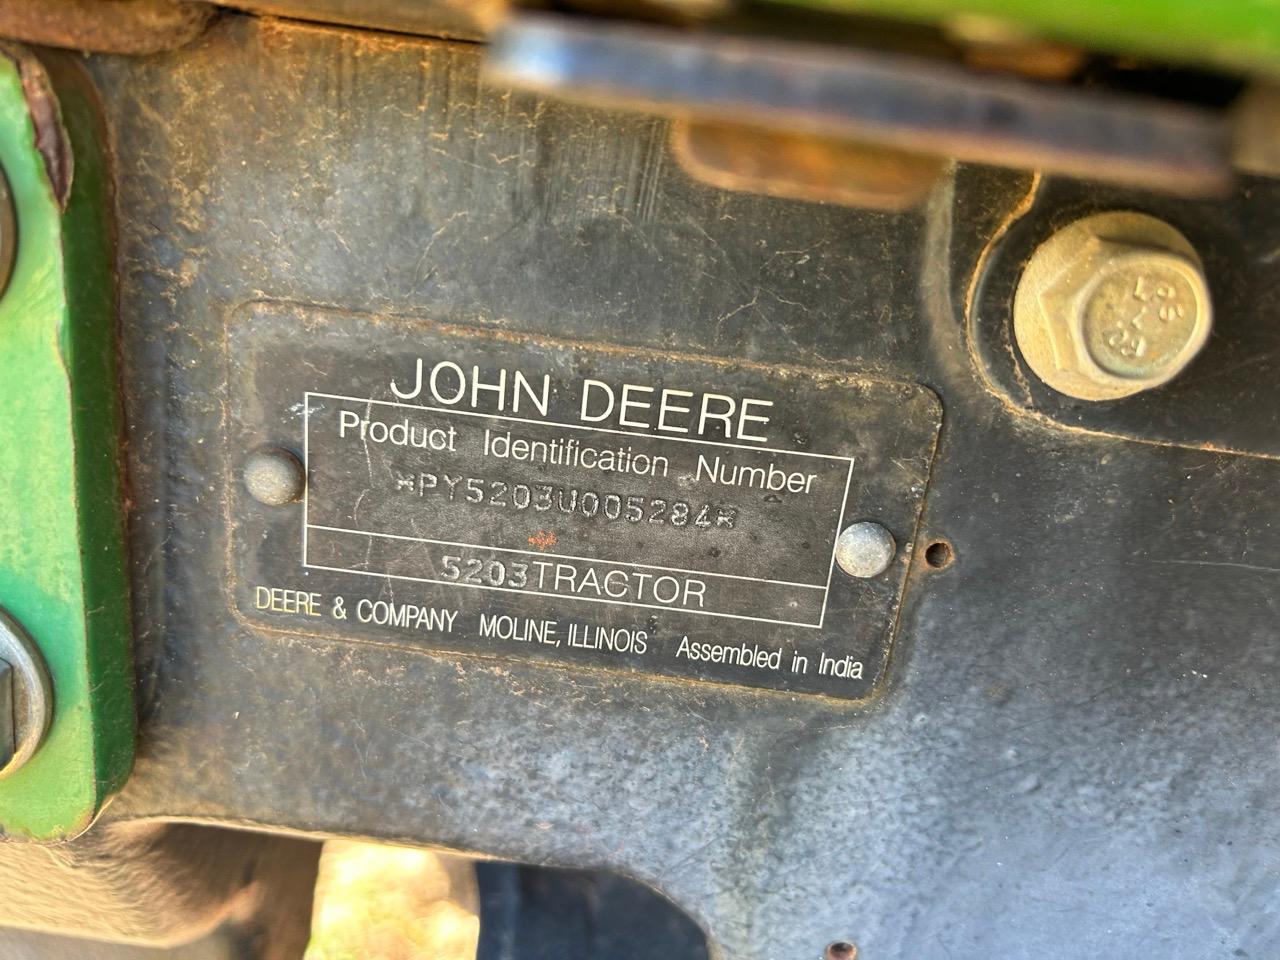 2007 John Deere 5203